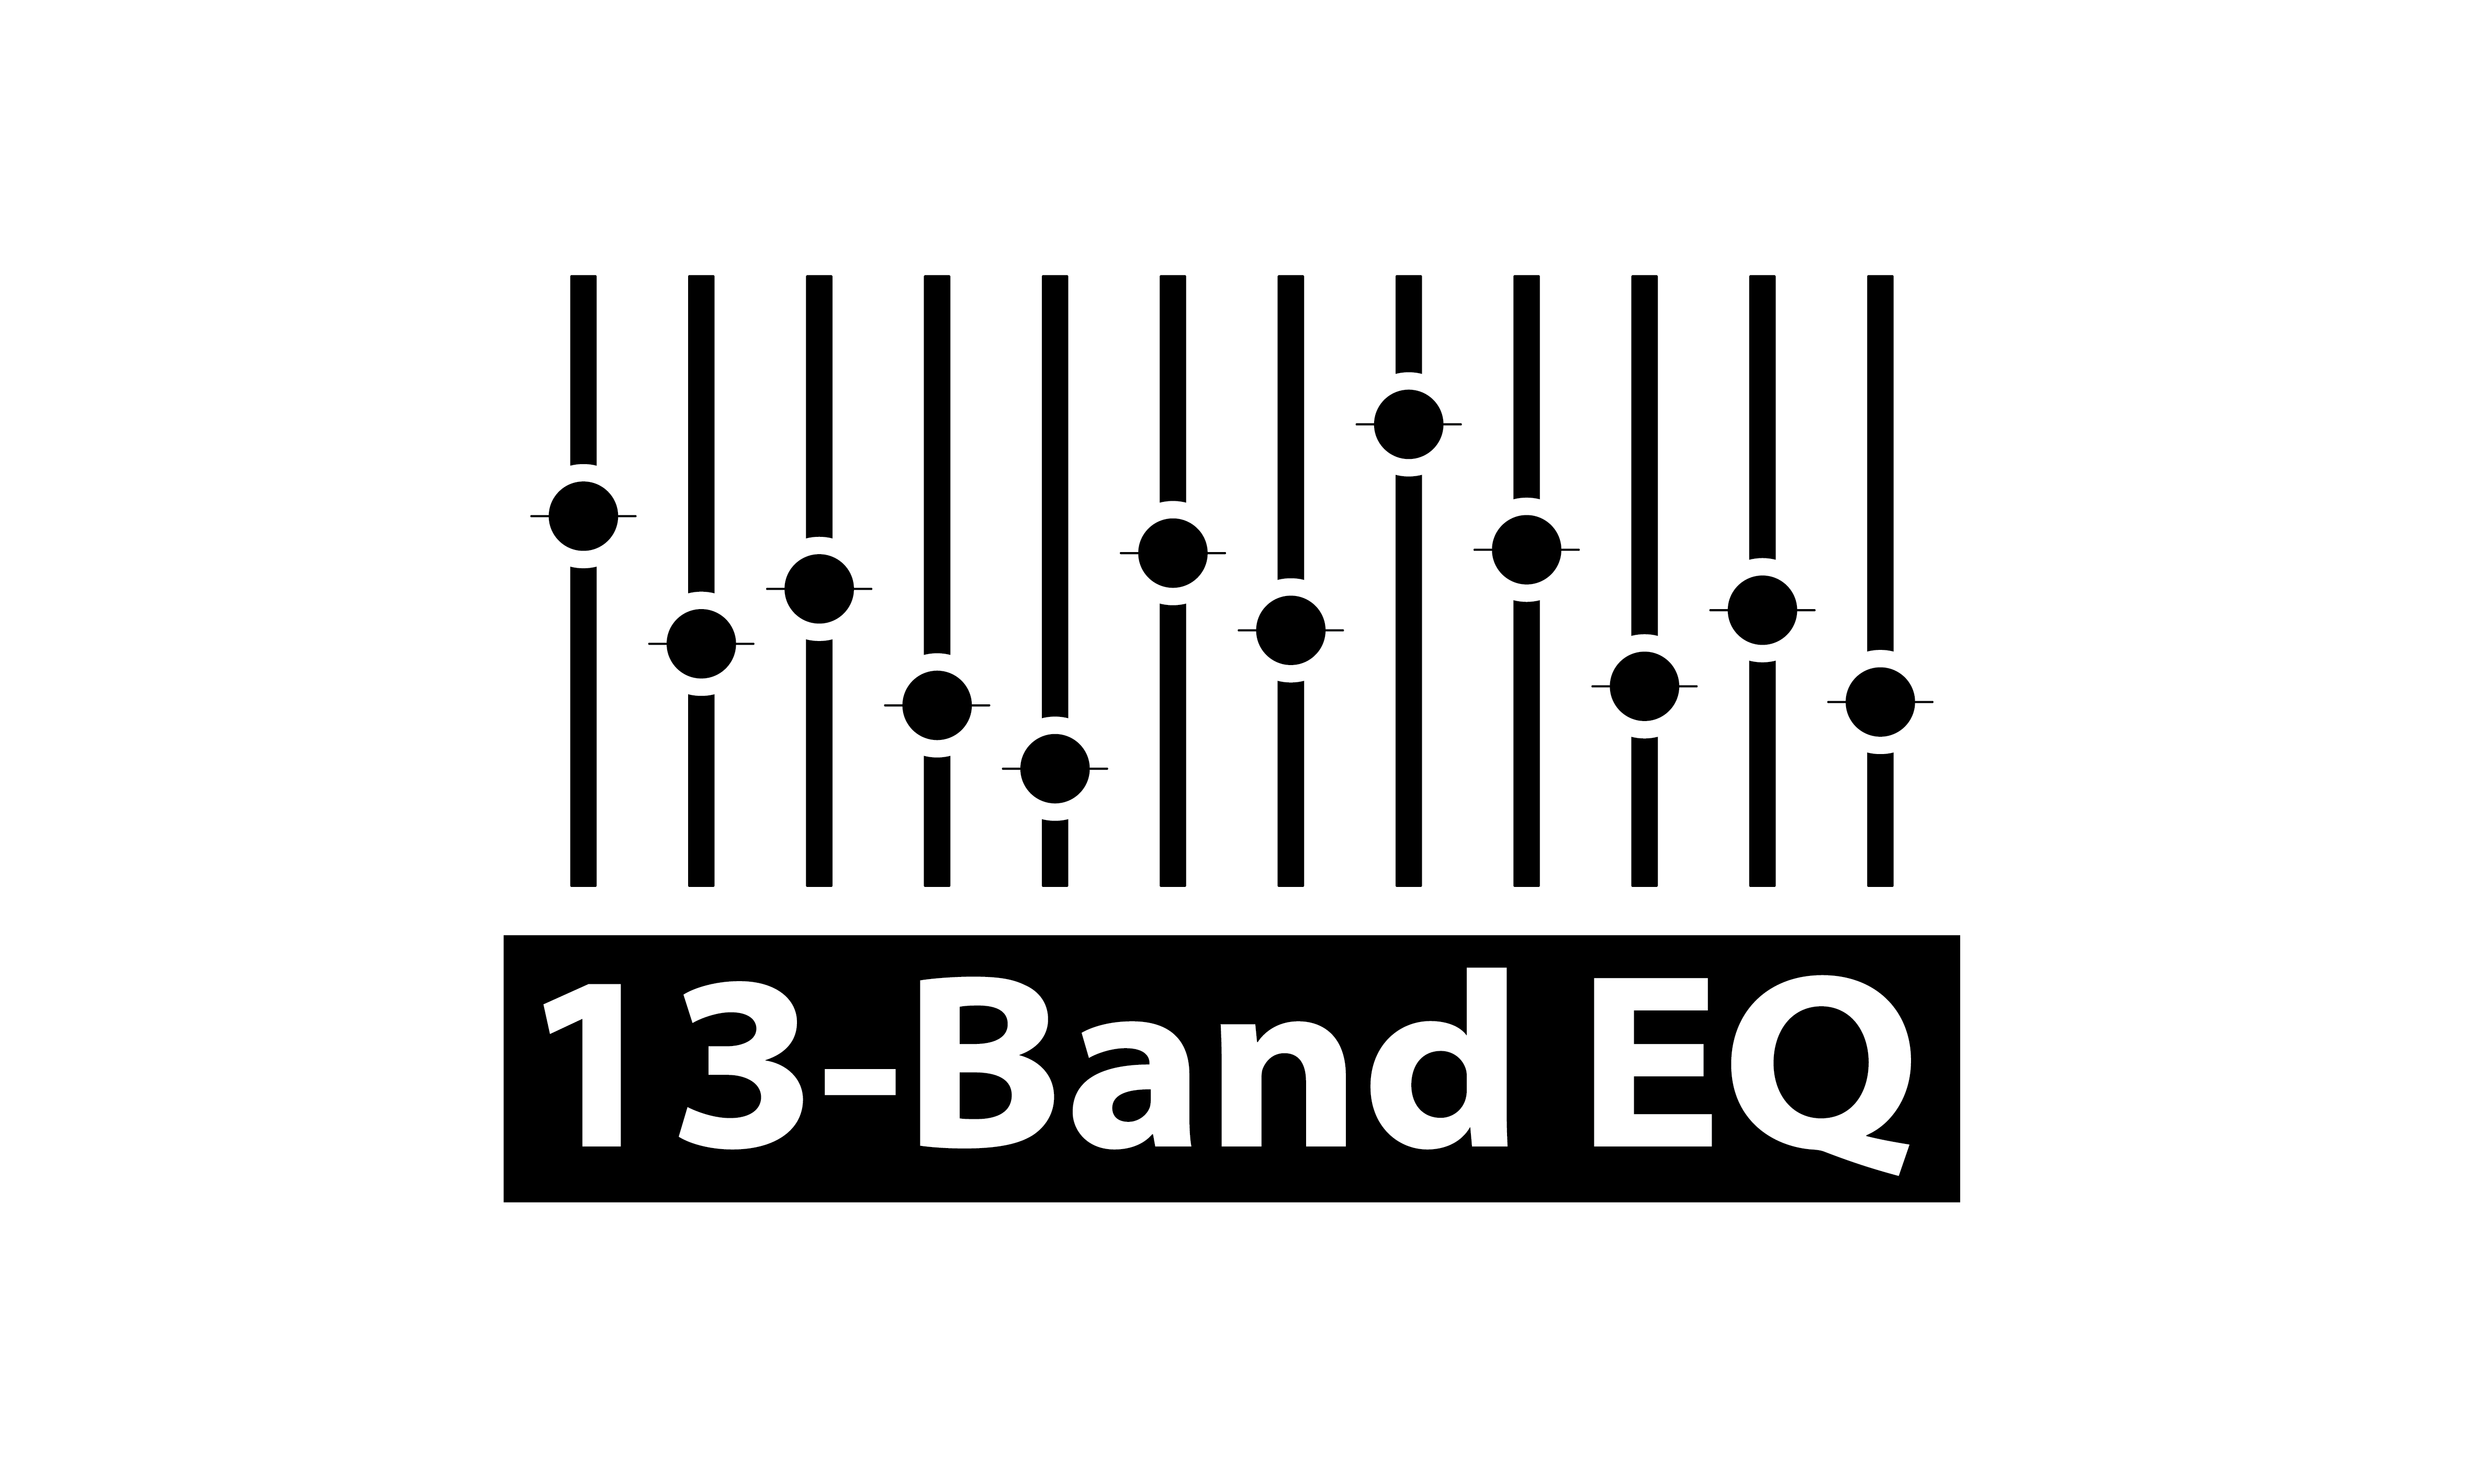 13-Band EQ